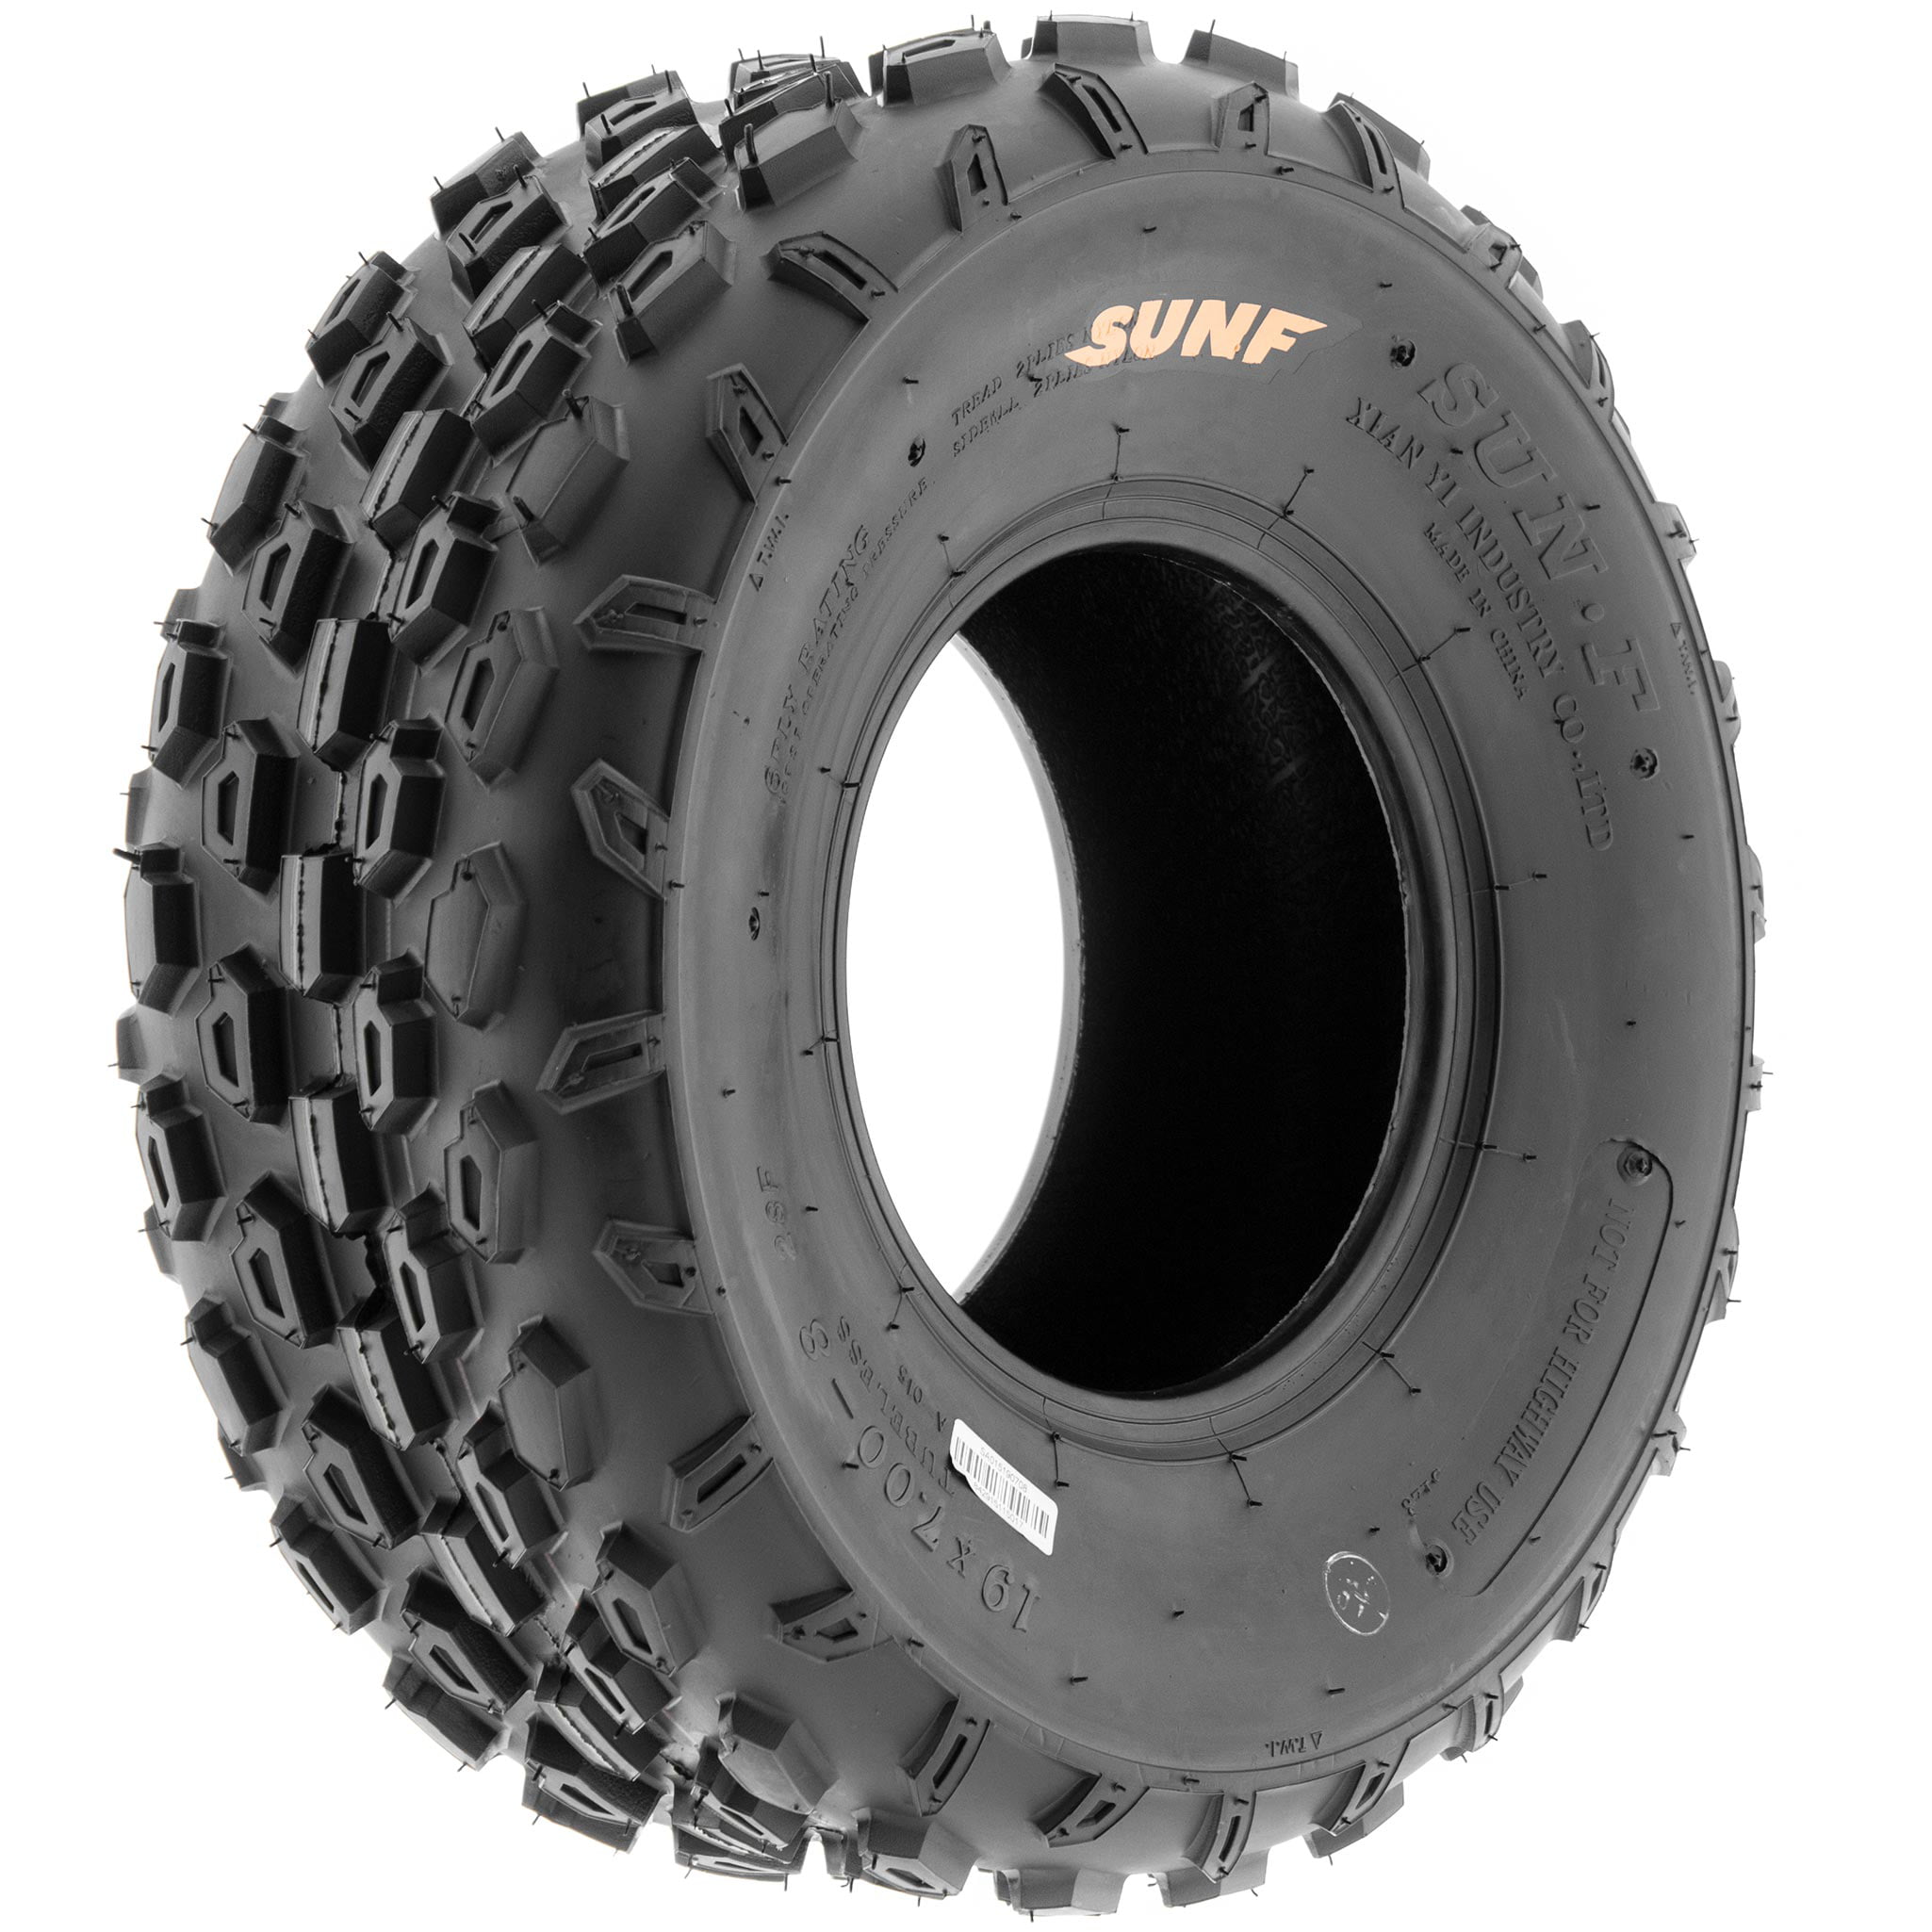 SunF A015 Sport-Racing ATV/UTV Tire 19x7-8 6-PR 